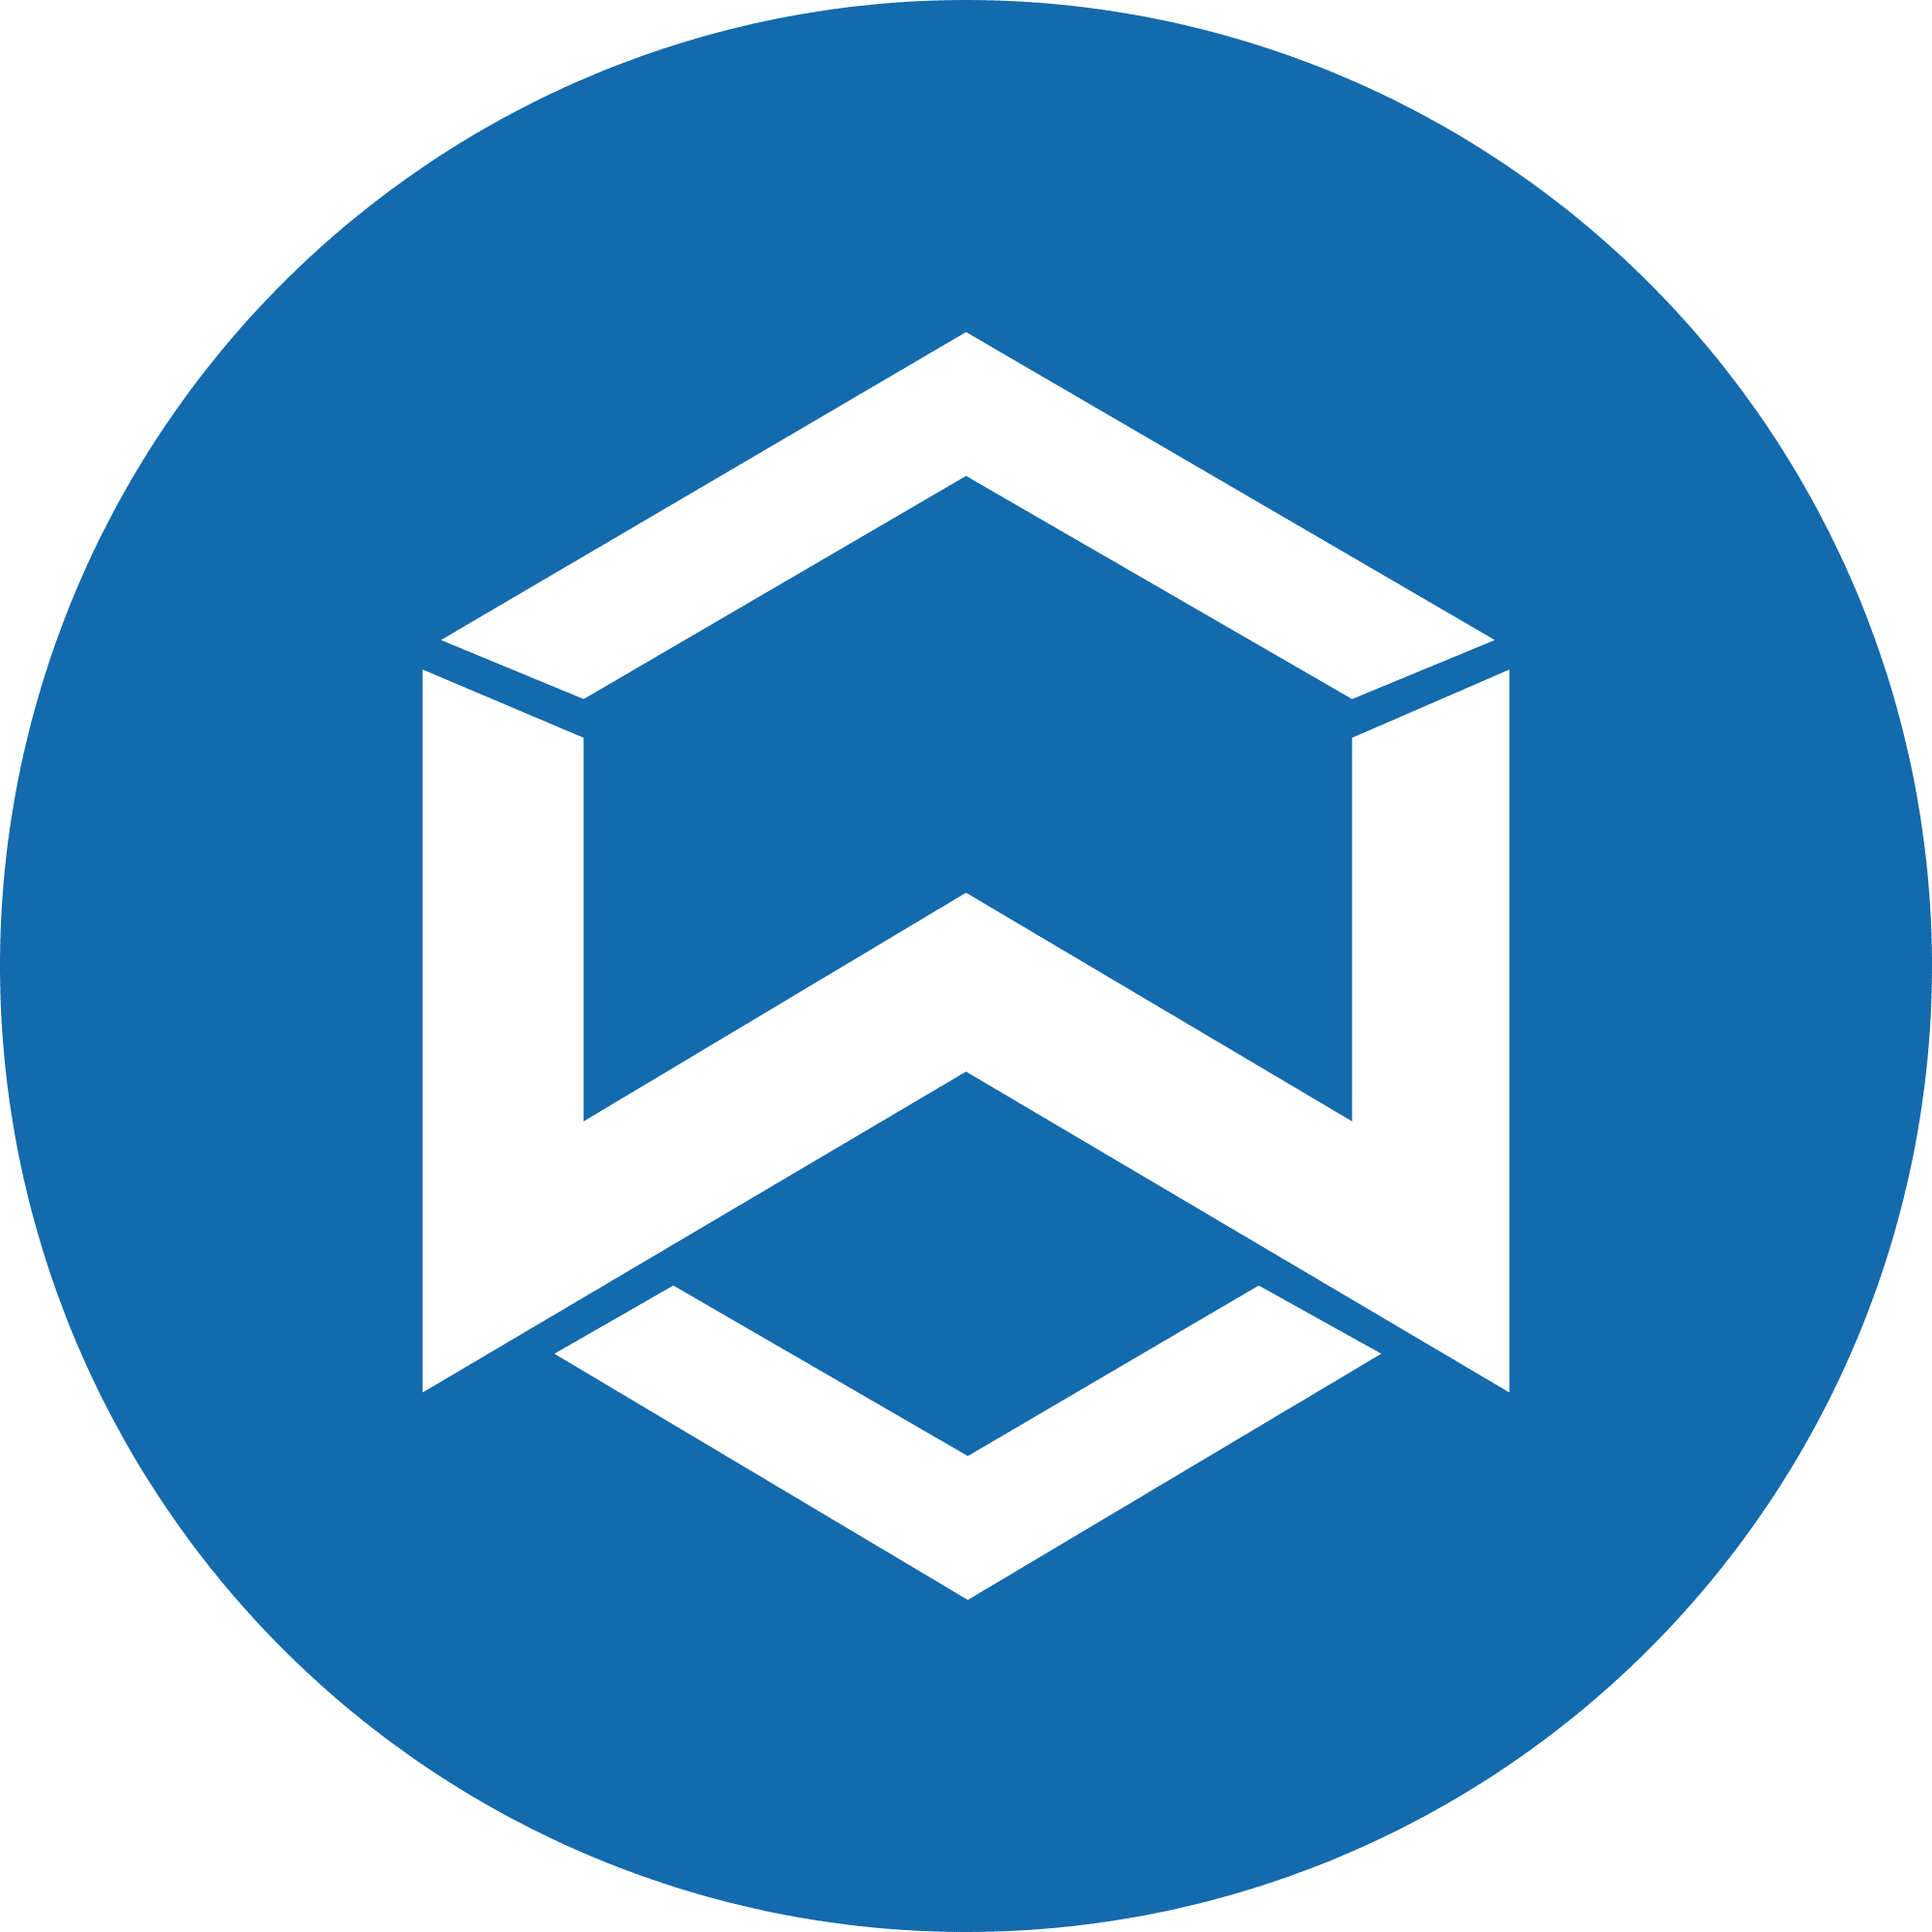 Wanchain logo in png format